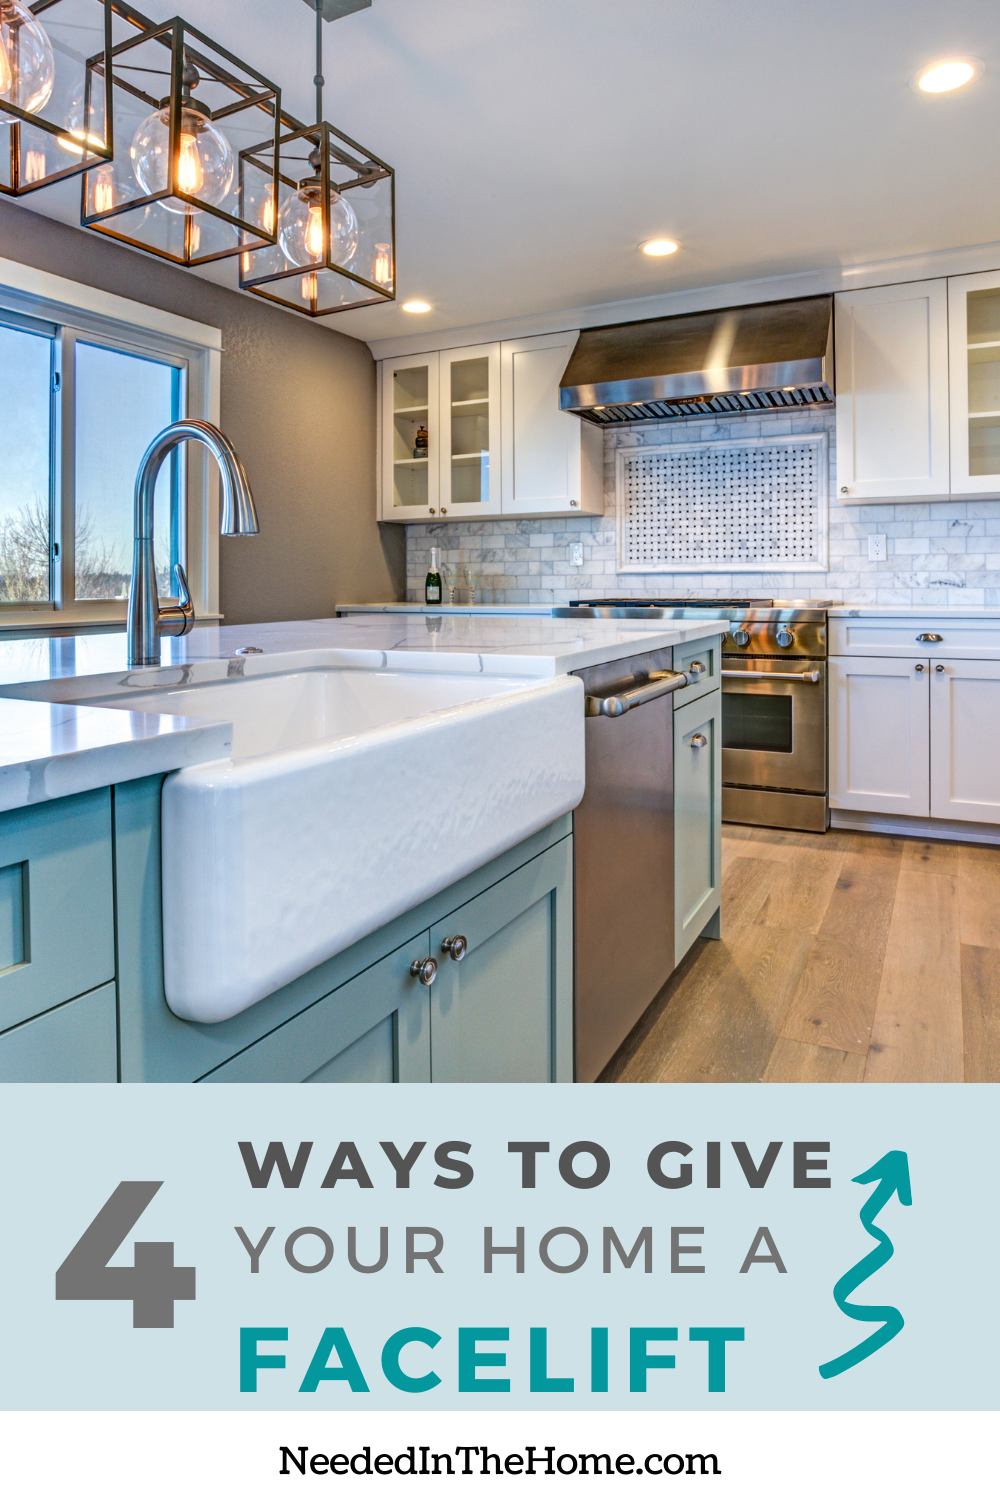 pinterest-pin-description 4 ways to give your home a facelift kitchen aqua lower cupboards cobblestone backsplash neededinthehome